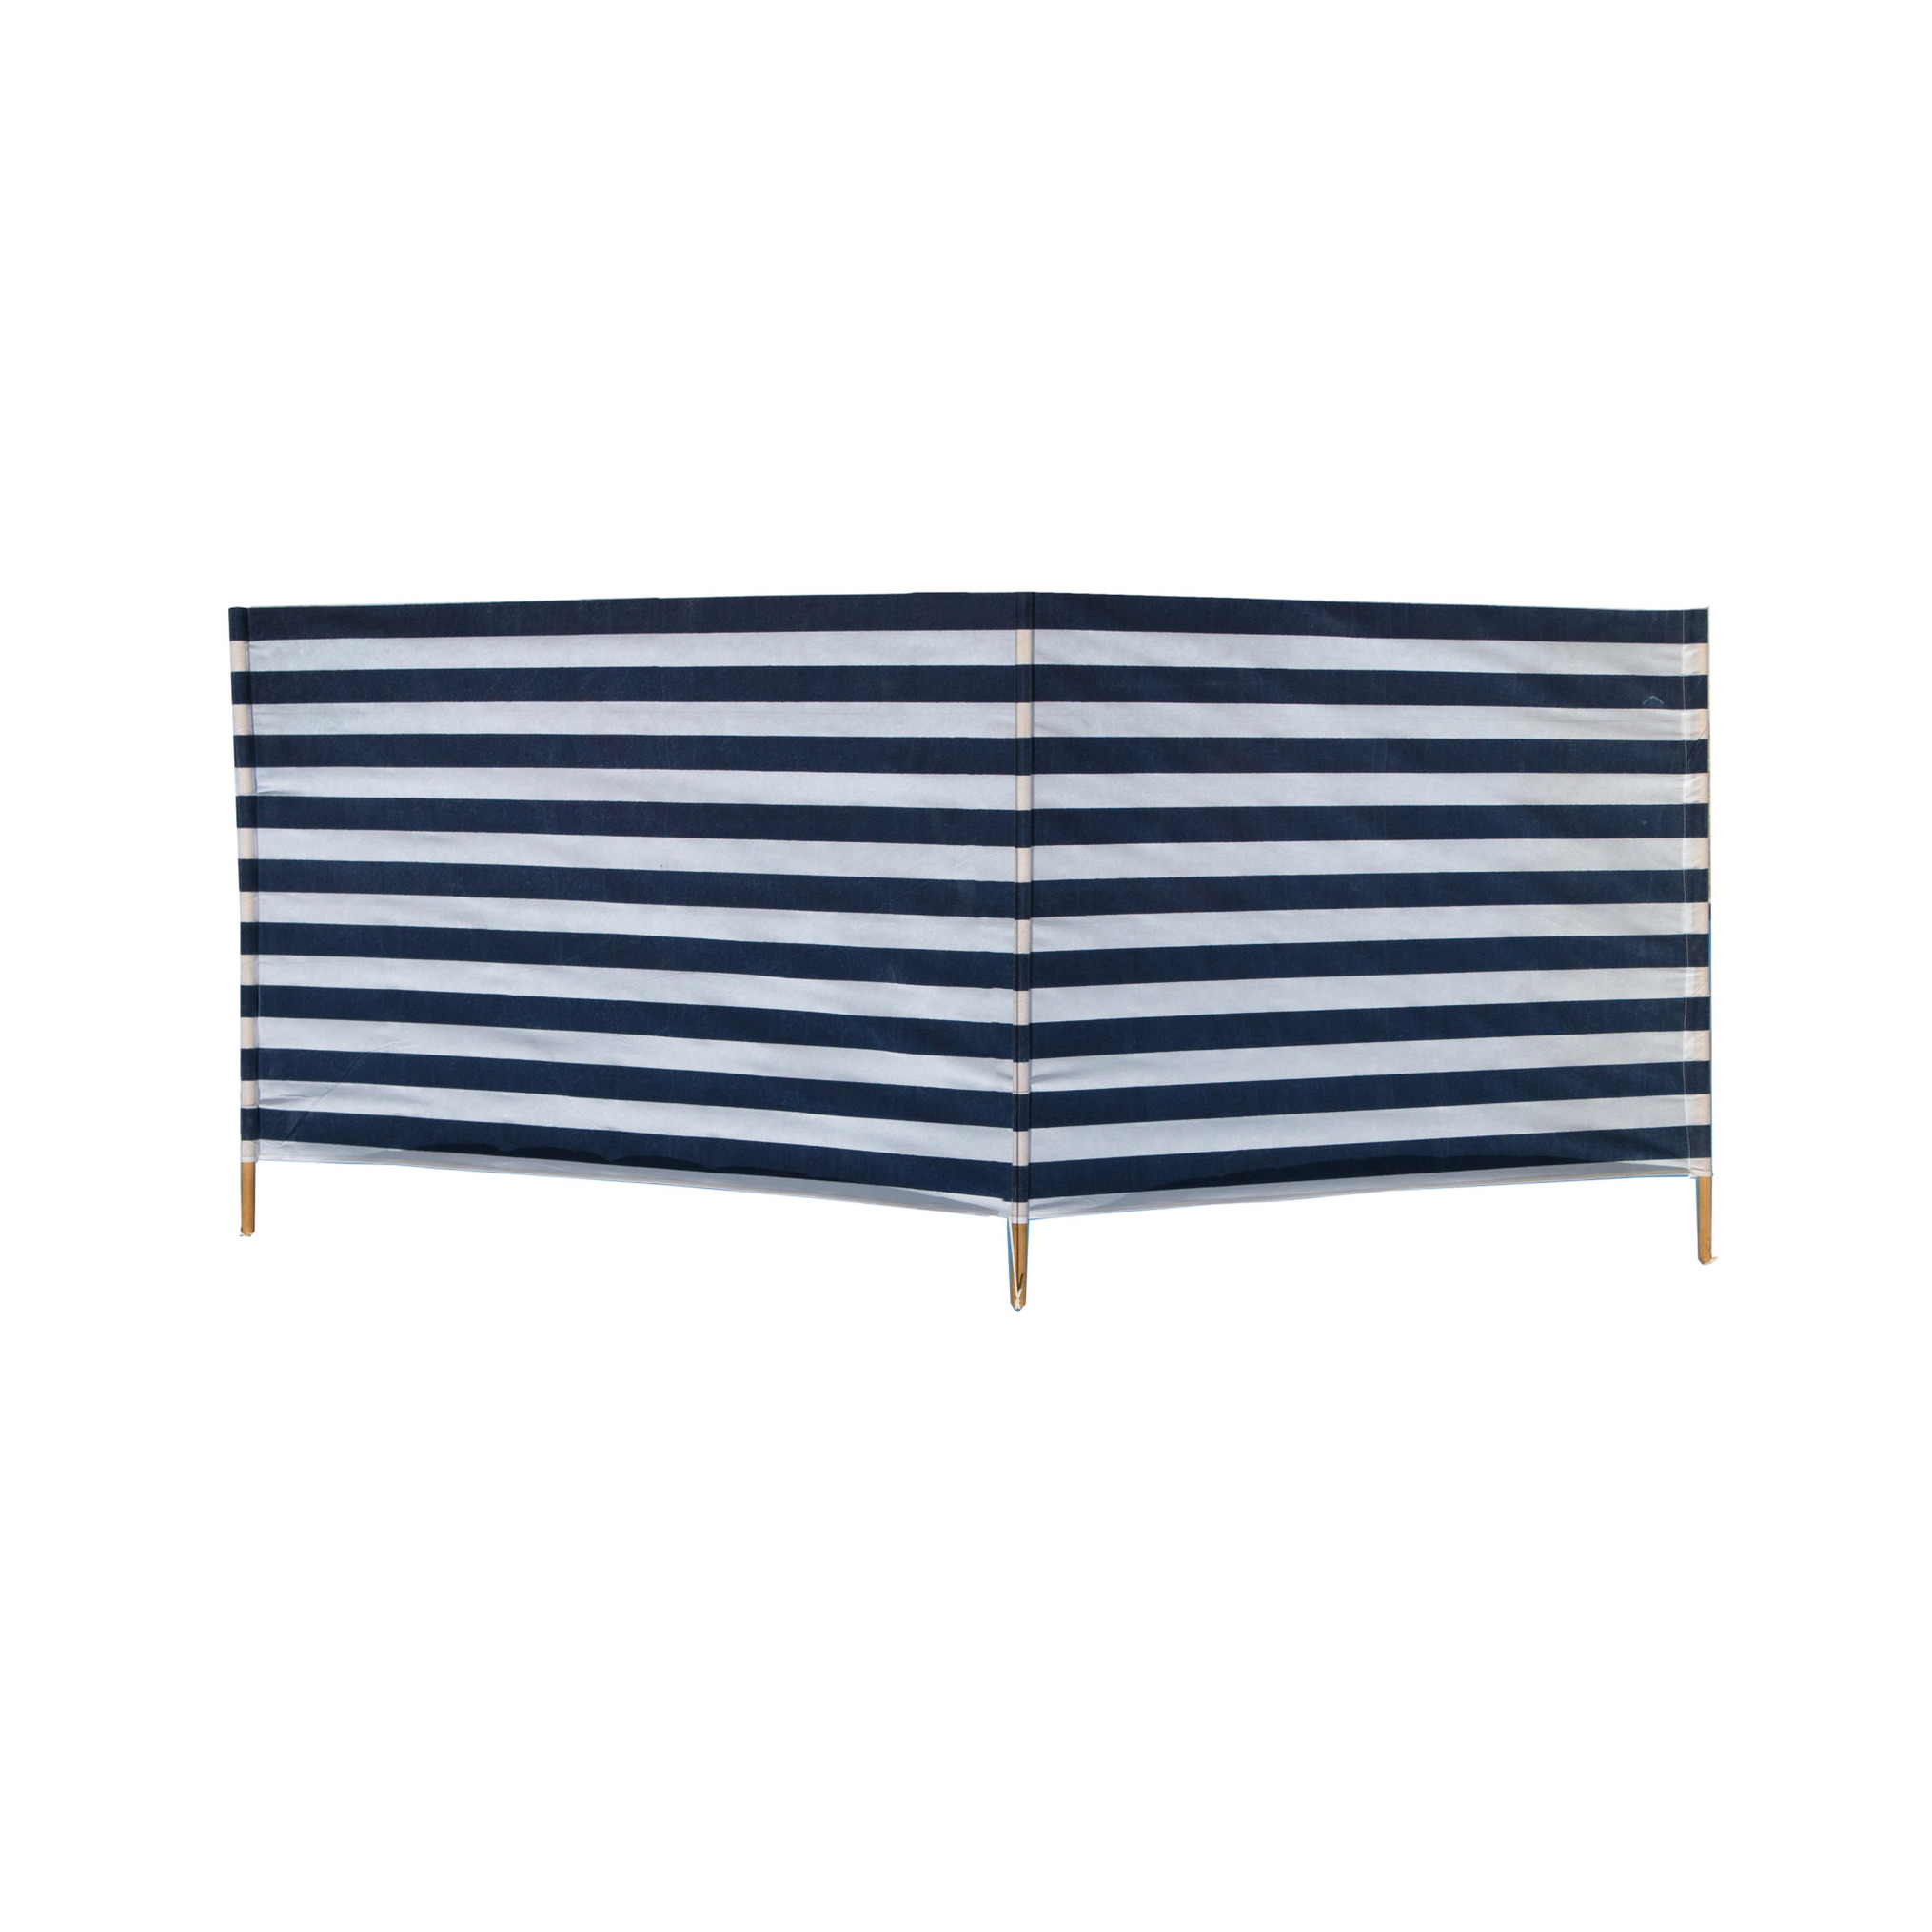 Strand-camping windscherm gestreept wit-blauw 240 cm x 90 cm